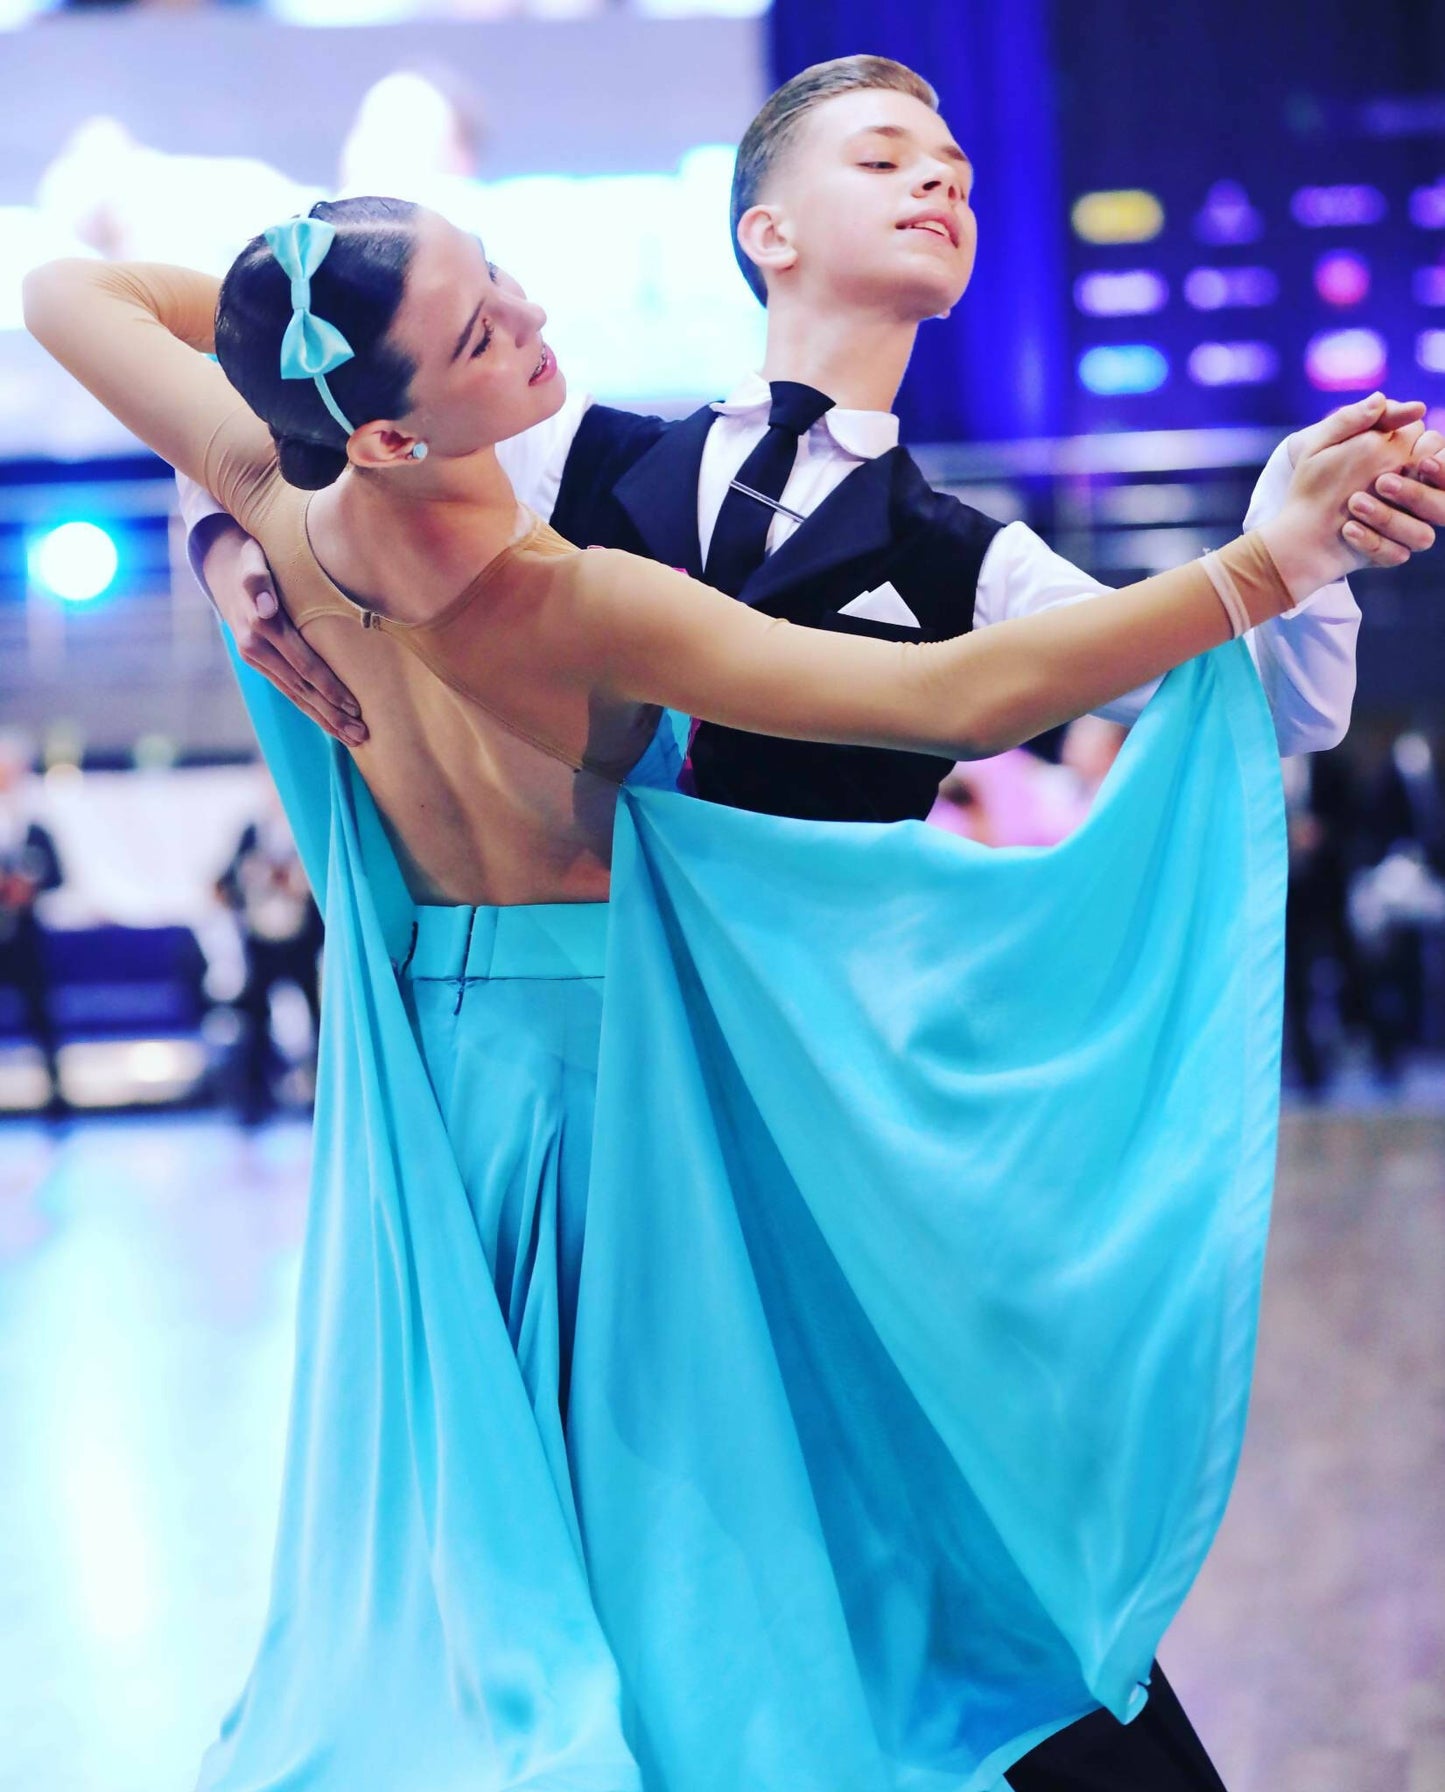 Outstanding Blue Junior Ballroom/Latin Dress, 2 in 1 ballroom dress for sale, dancesport